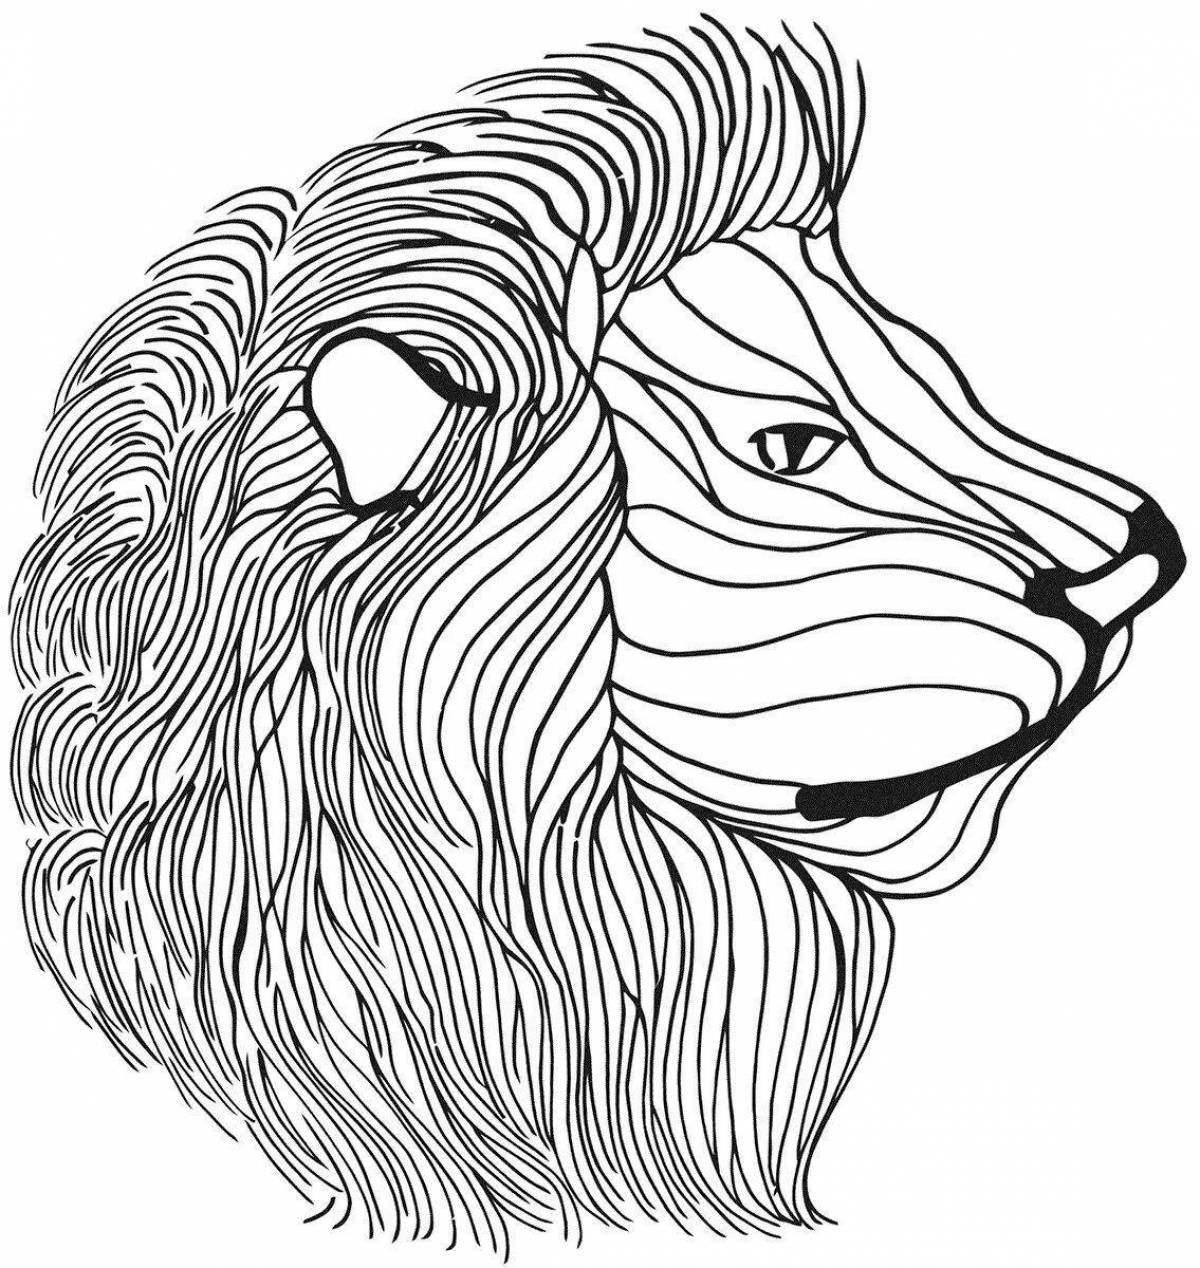 Gorgeous lion head coloring page